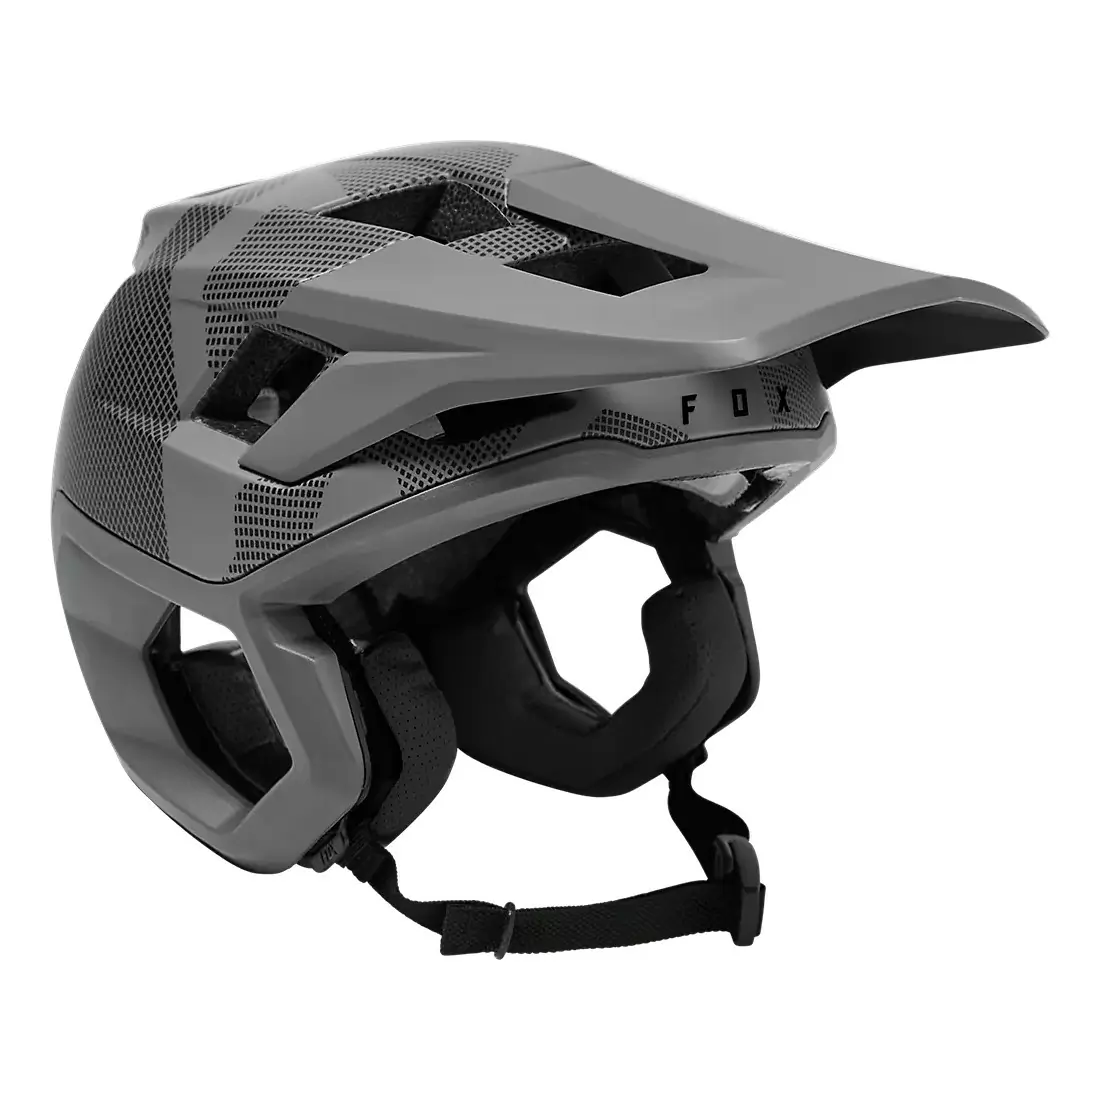 Dropframe Pro Camo Enduro Helmet Gray Camouflage Size XL (58-60cm) - image